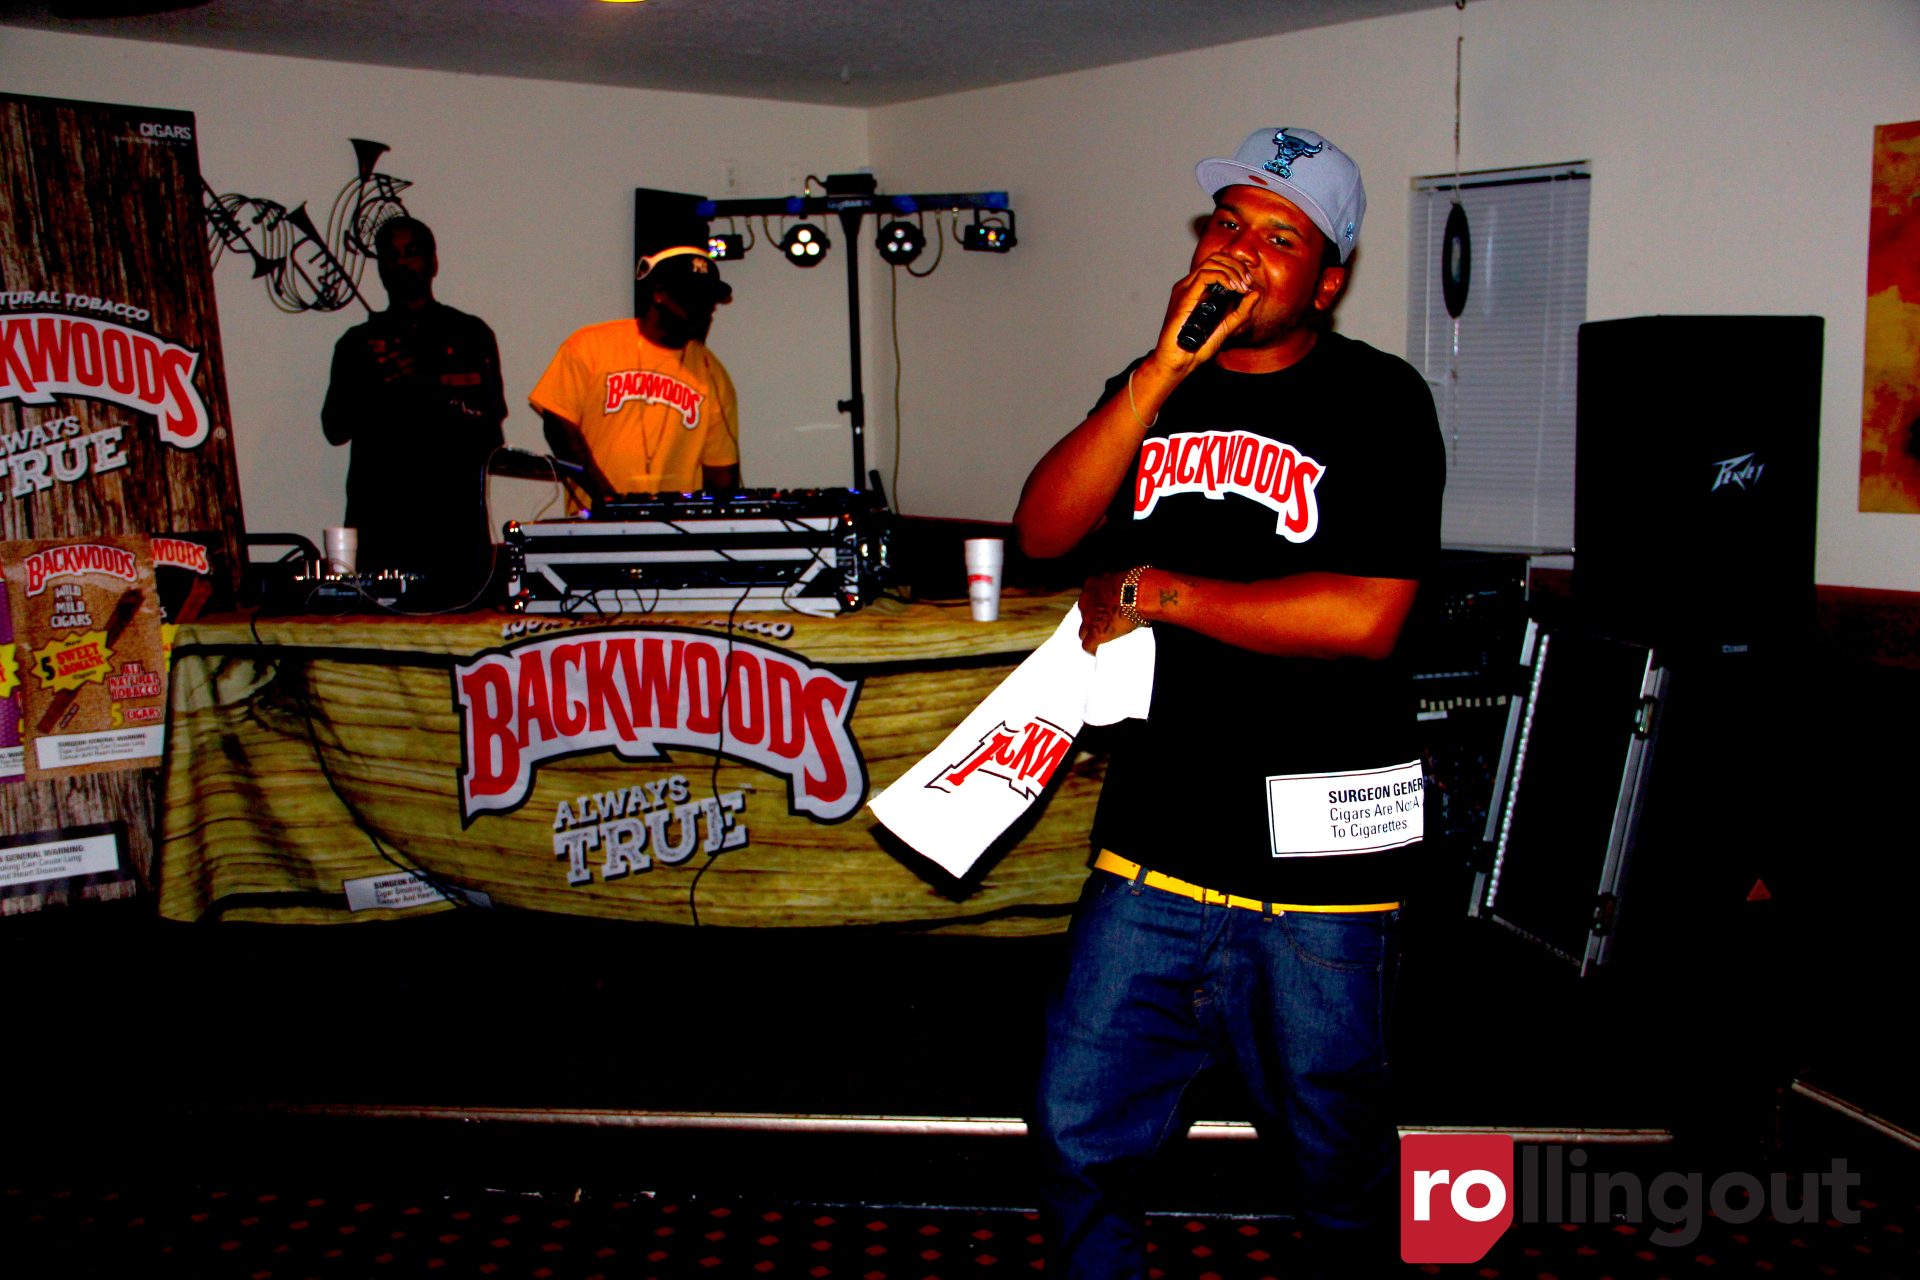 Prezz and Jemouri headline The Smoke House Social rap showcase in Jacksonville